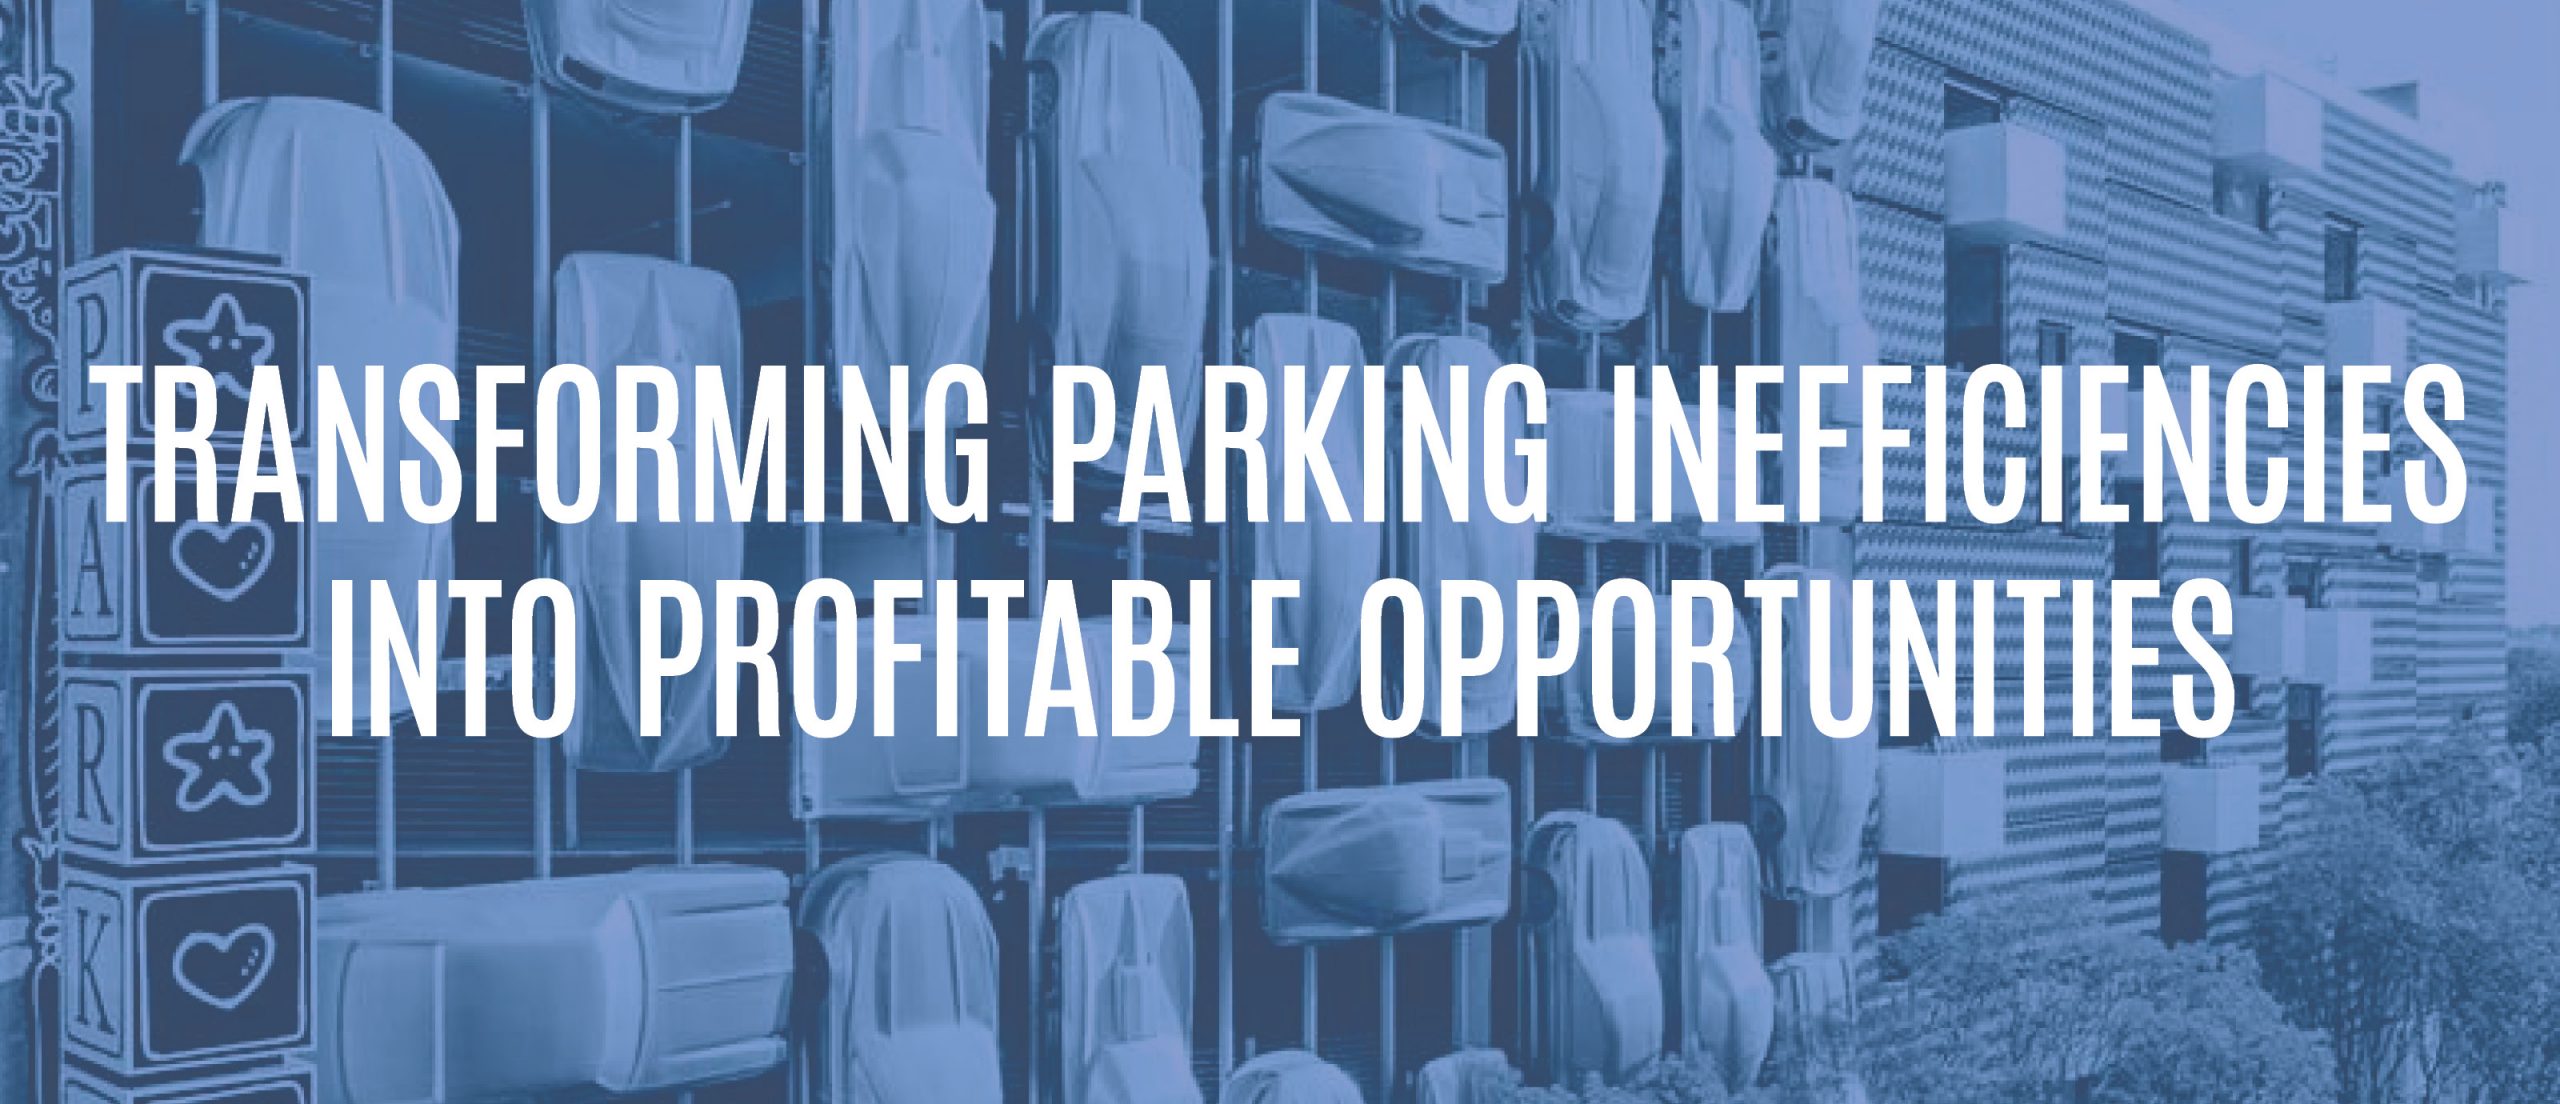 Blog title: Transforming parking inefficiencies into profitable opportunities